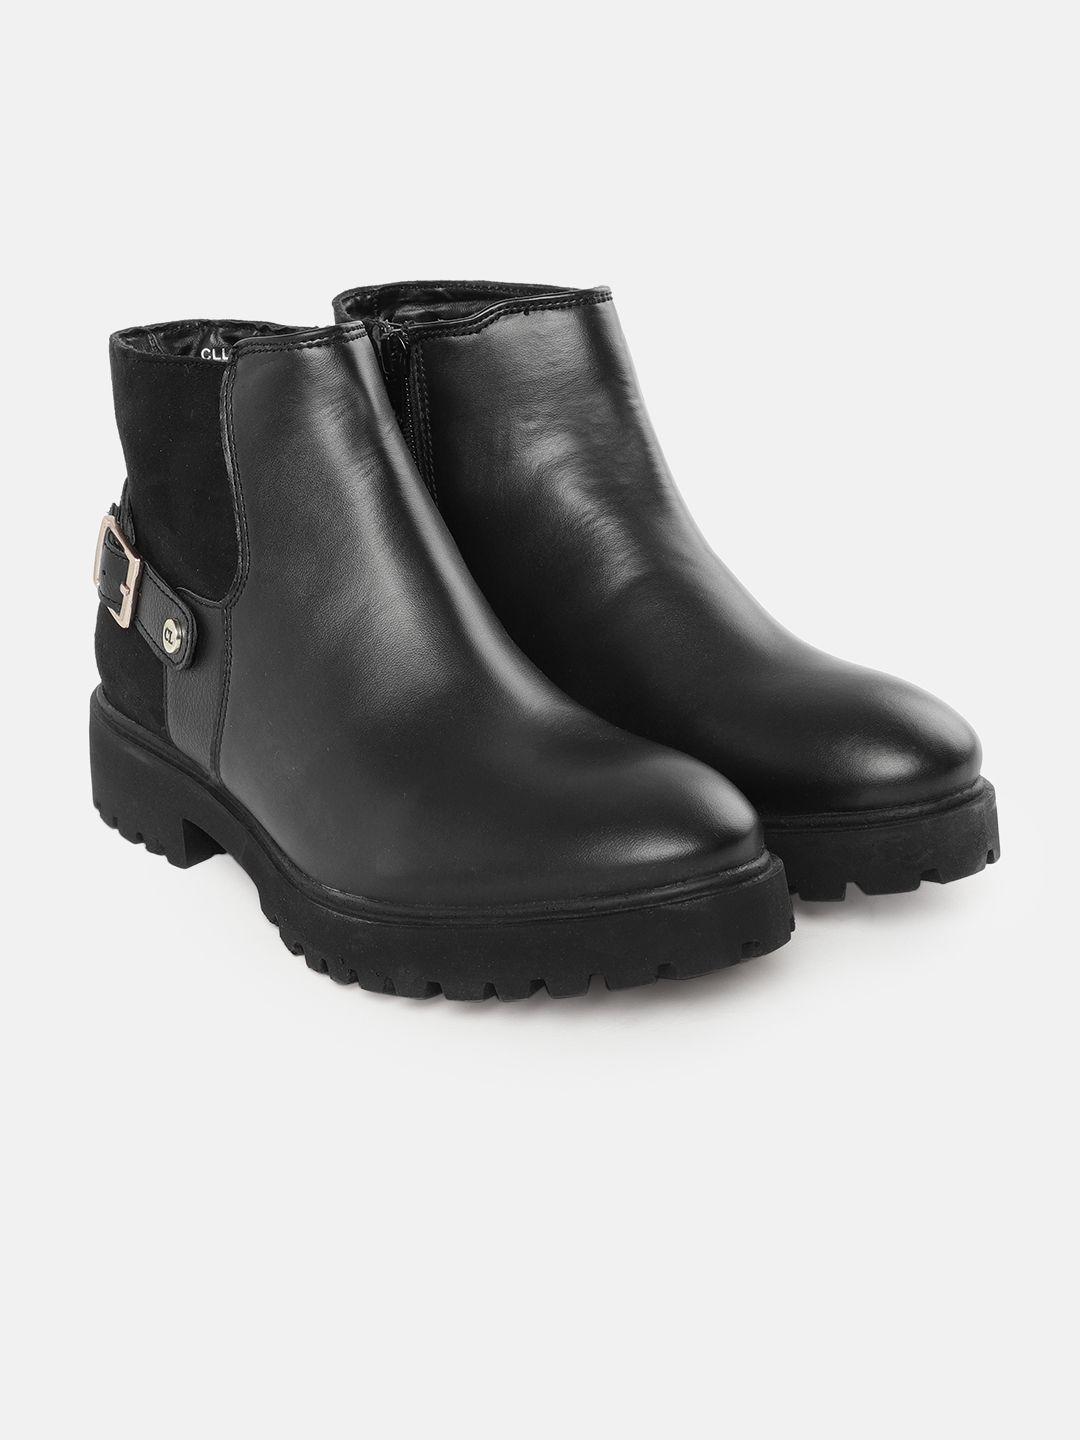 carlton london women black solid flat boots